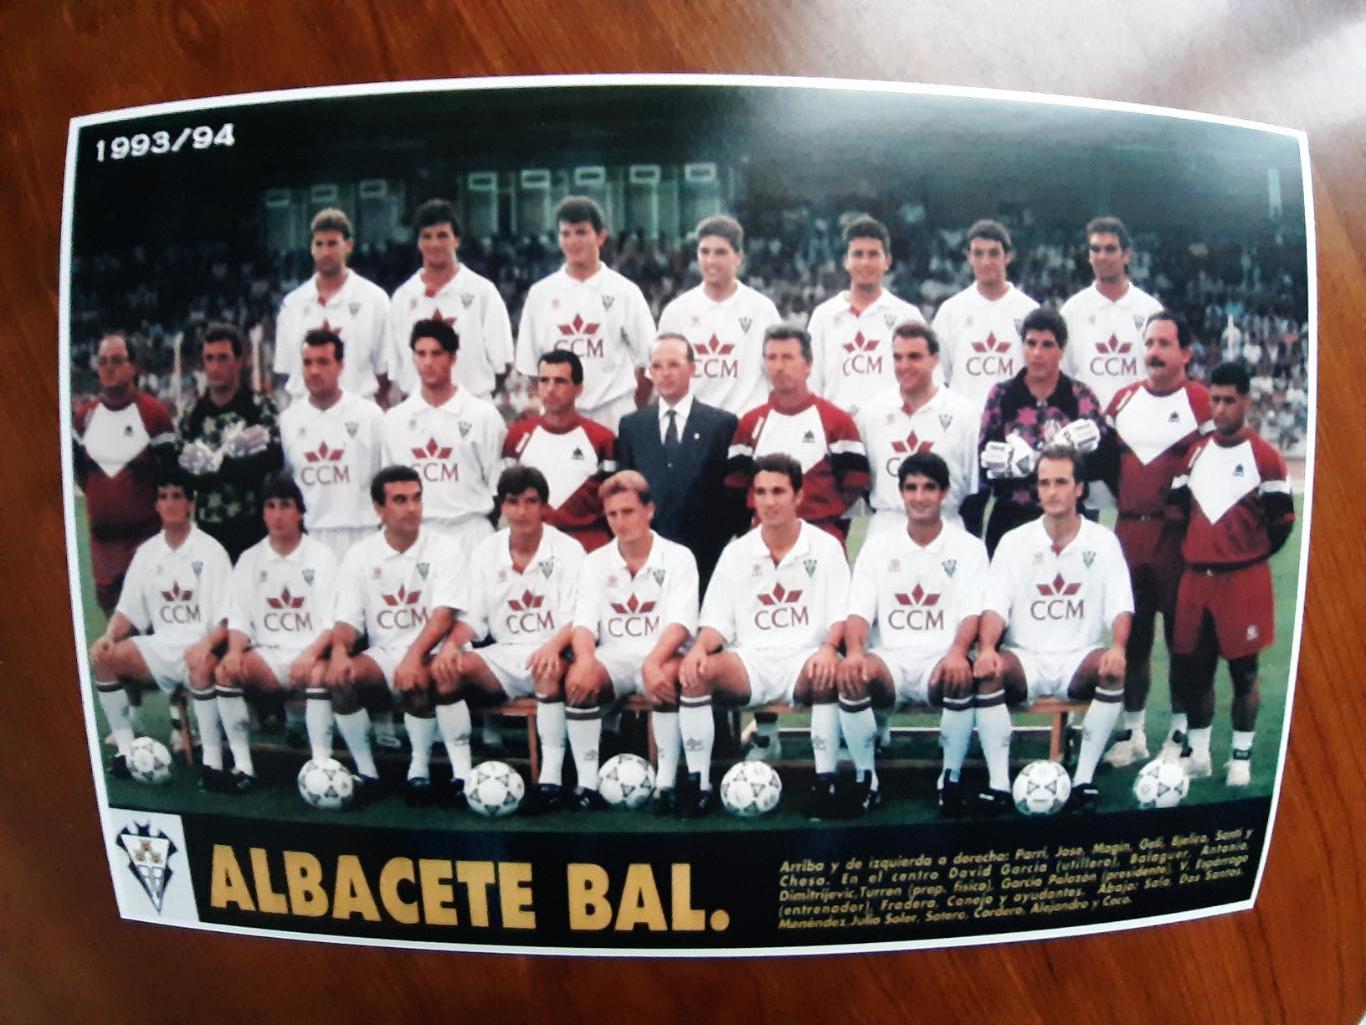 ALBACETE1993/94 (SPAIN)